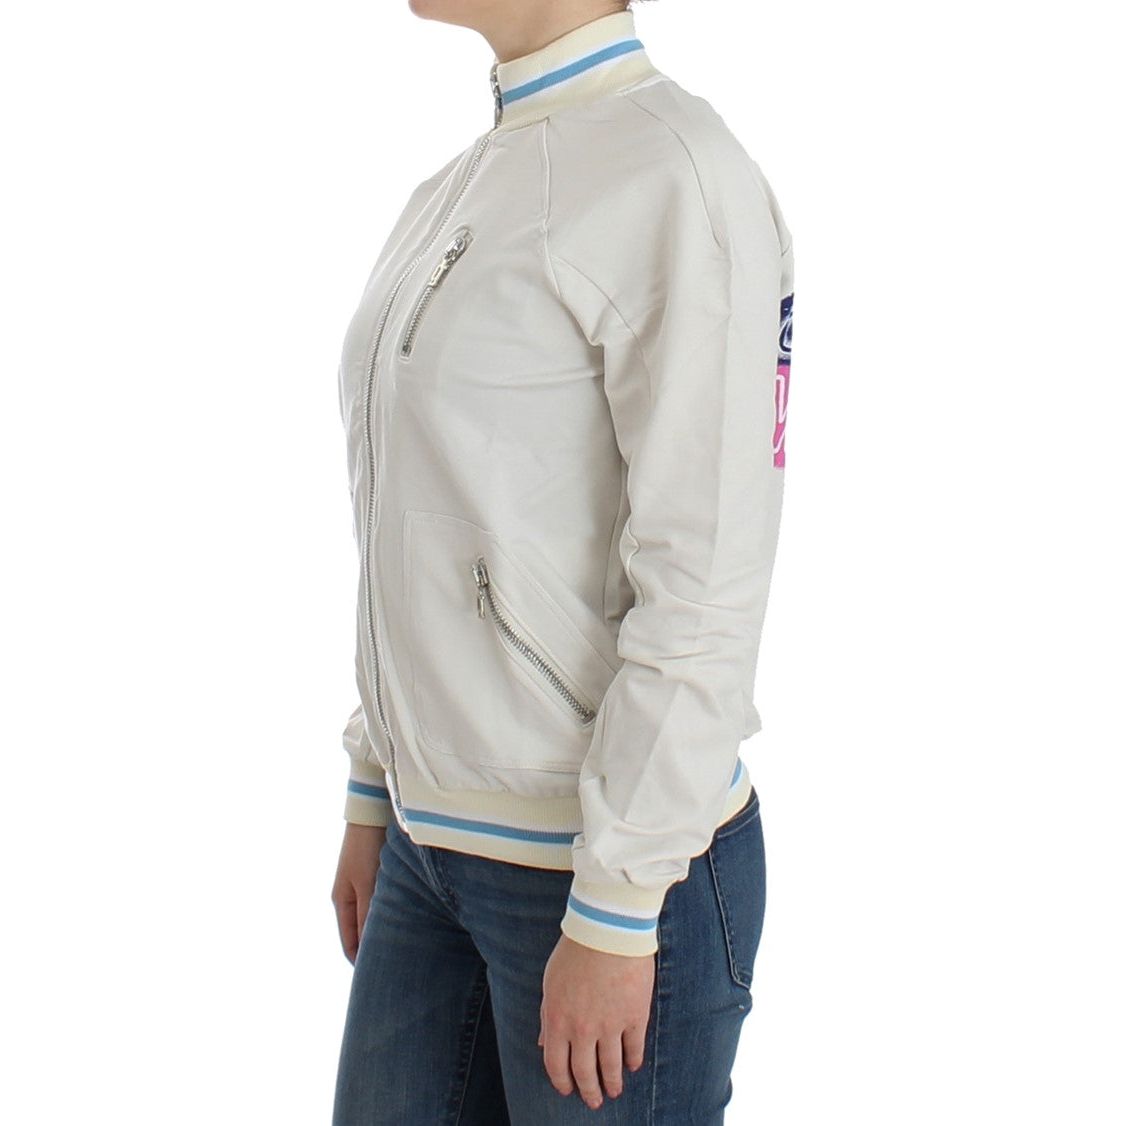 John Galliano Elegant White Zip Cardigan white-mock-zip-cardigan-sweatshirt-sweater